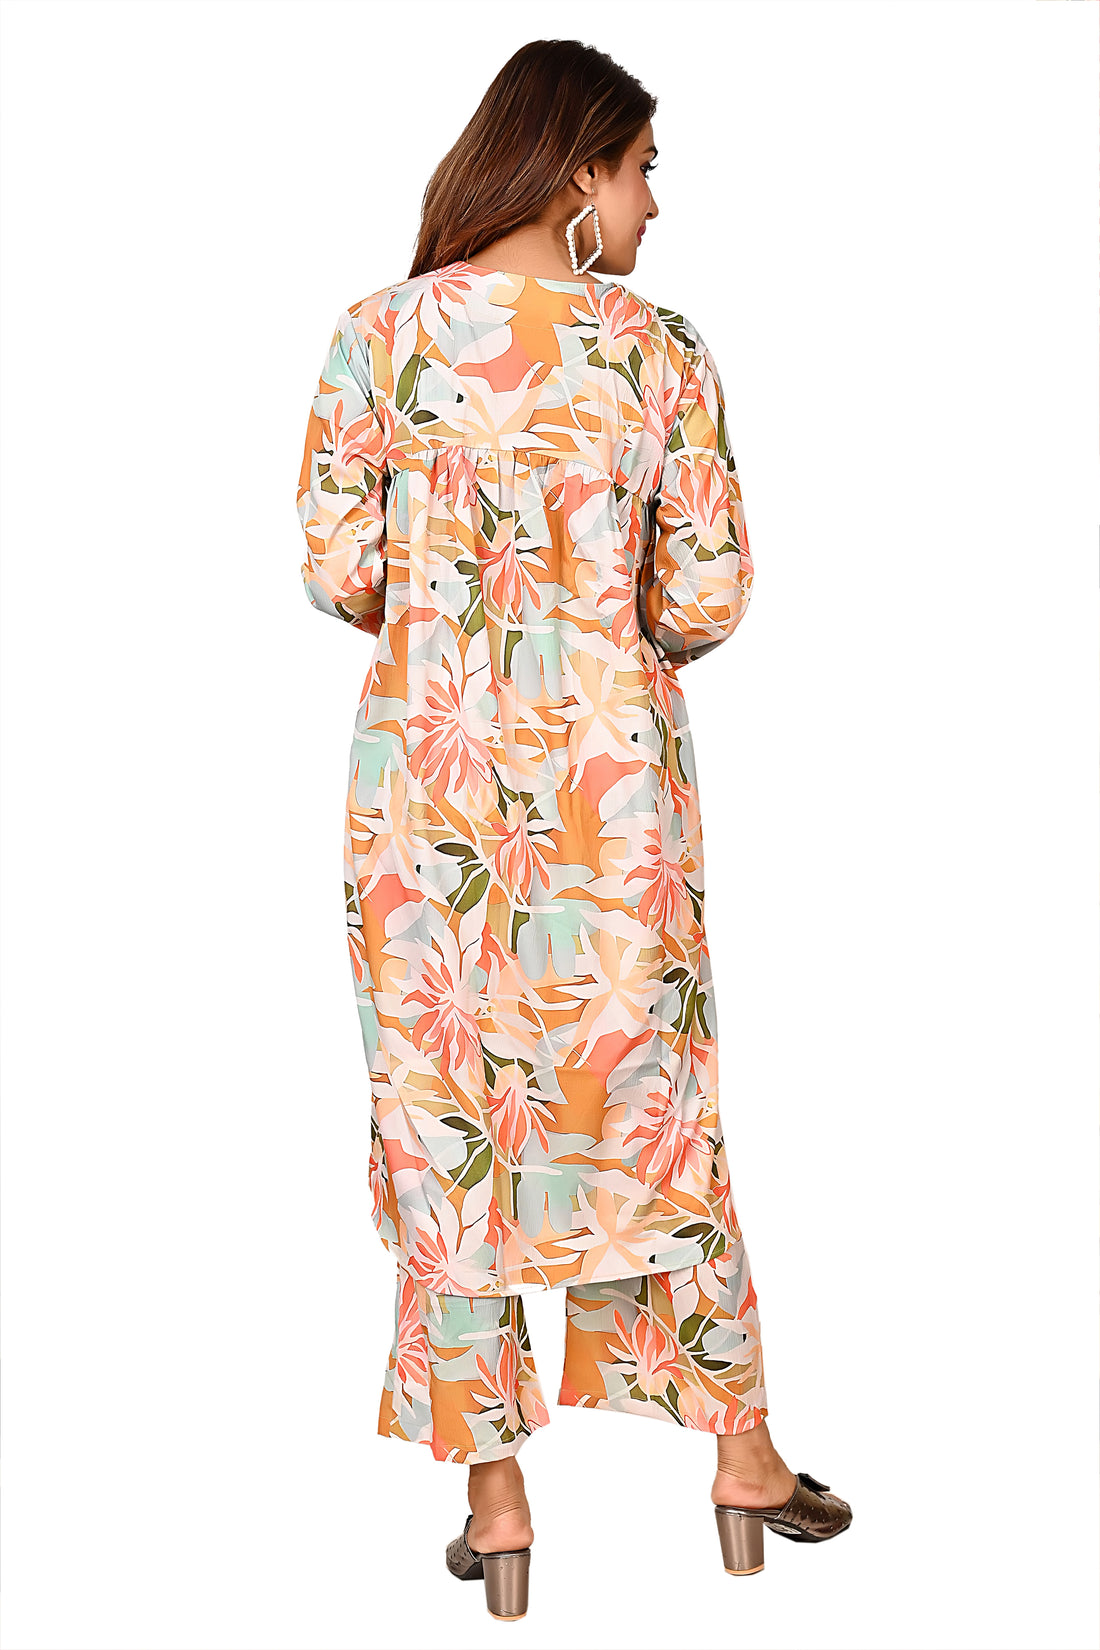 Nirmal online Premium Quality Cord Set  for Women in Peach Colour Print